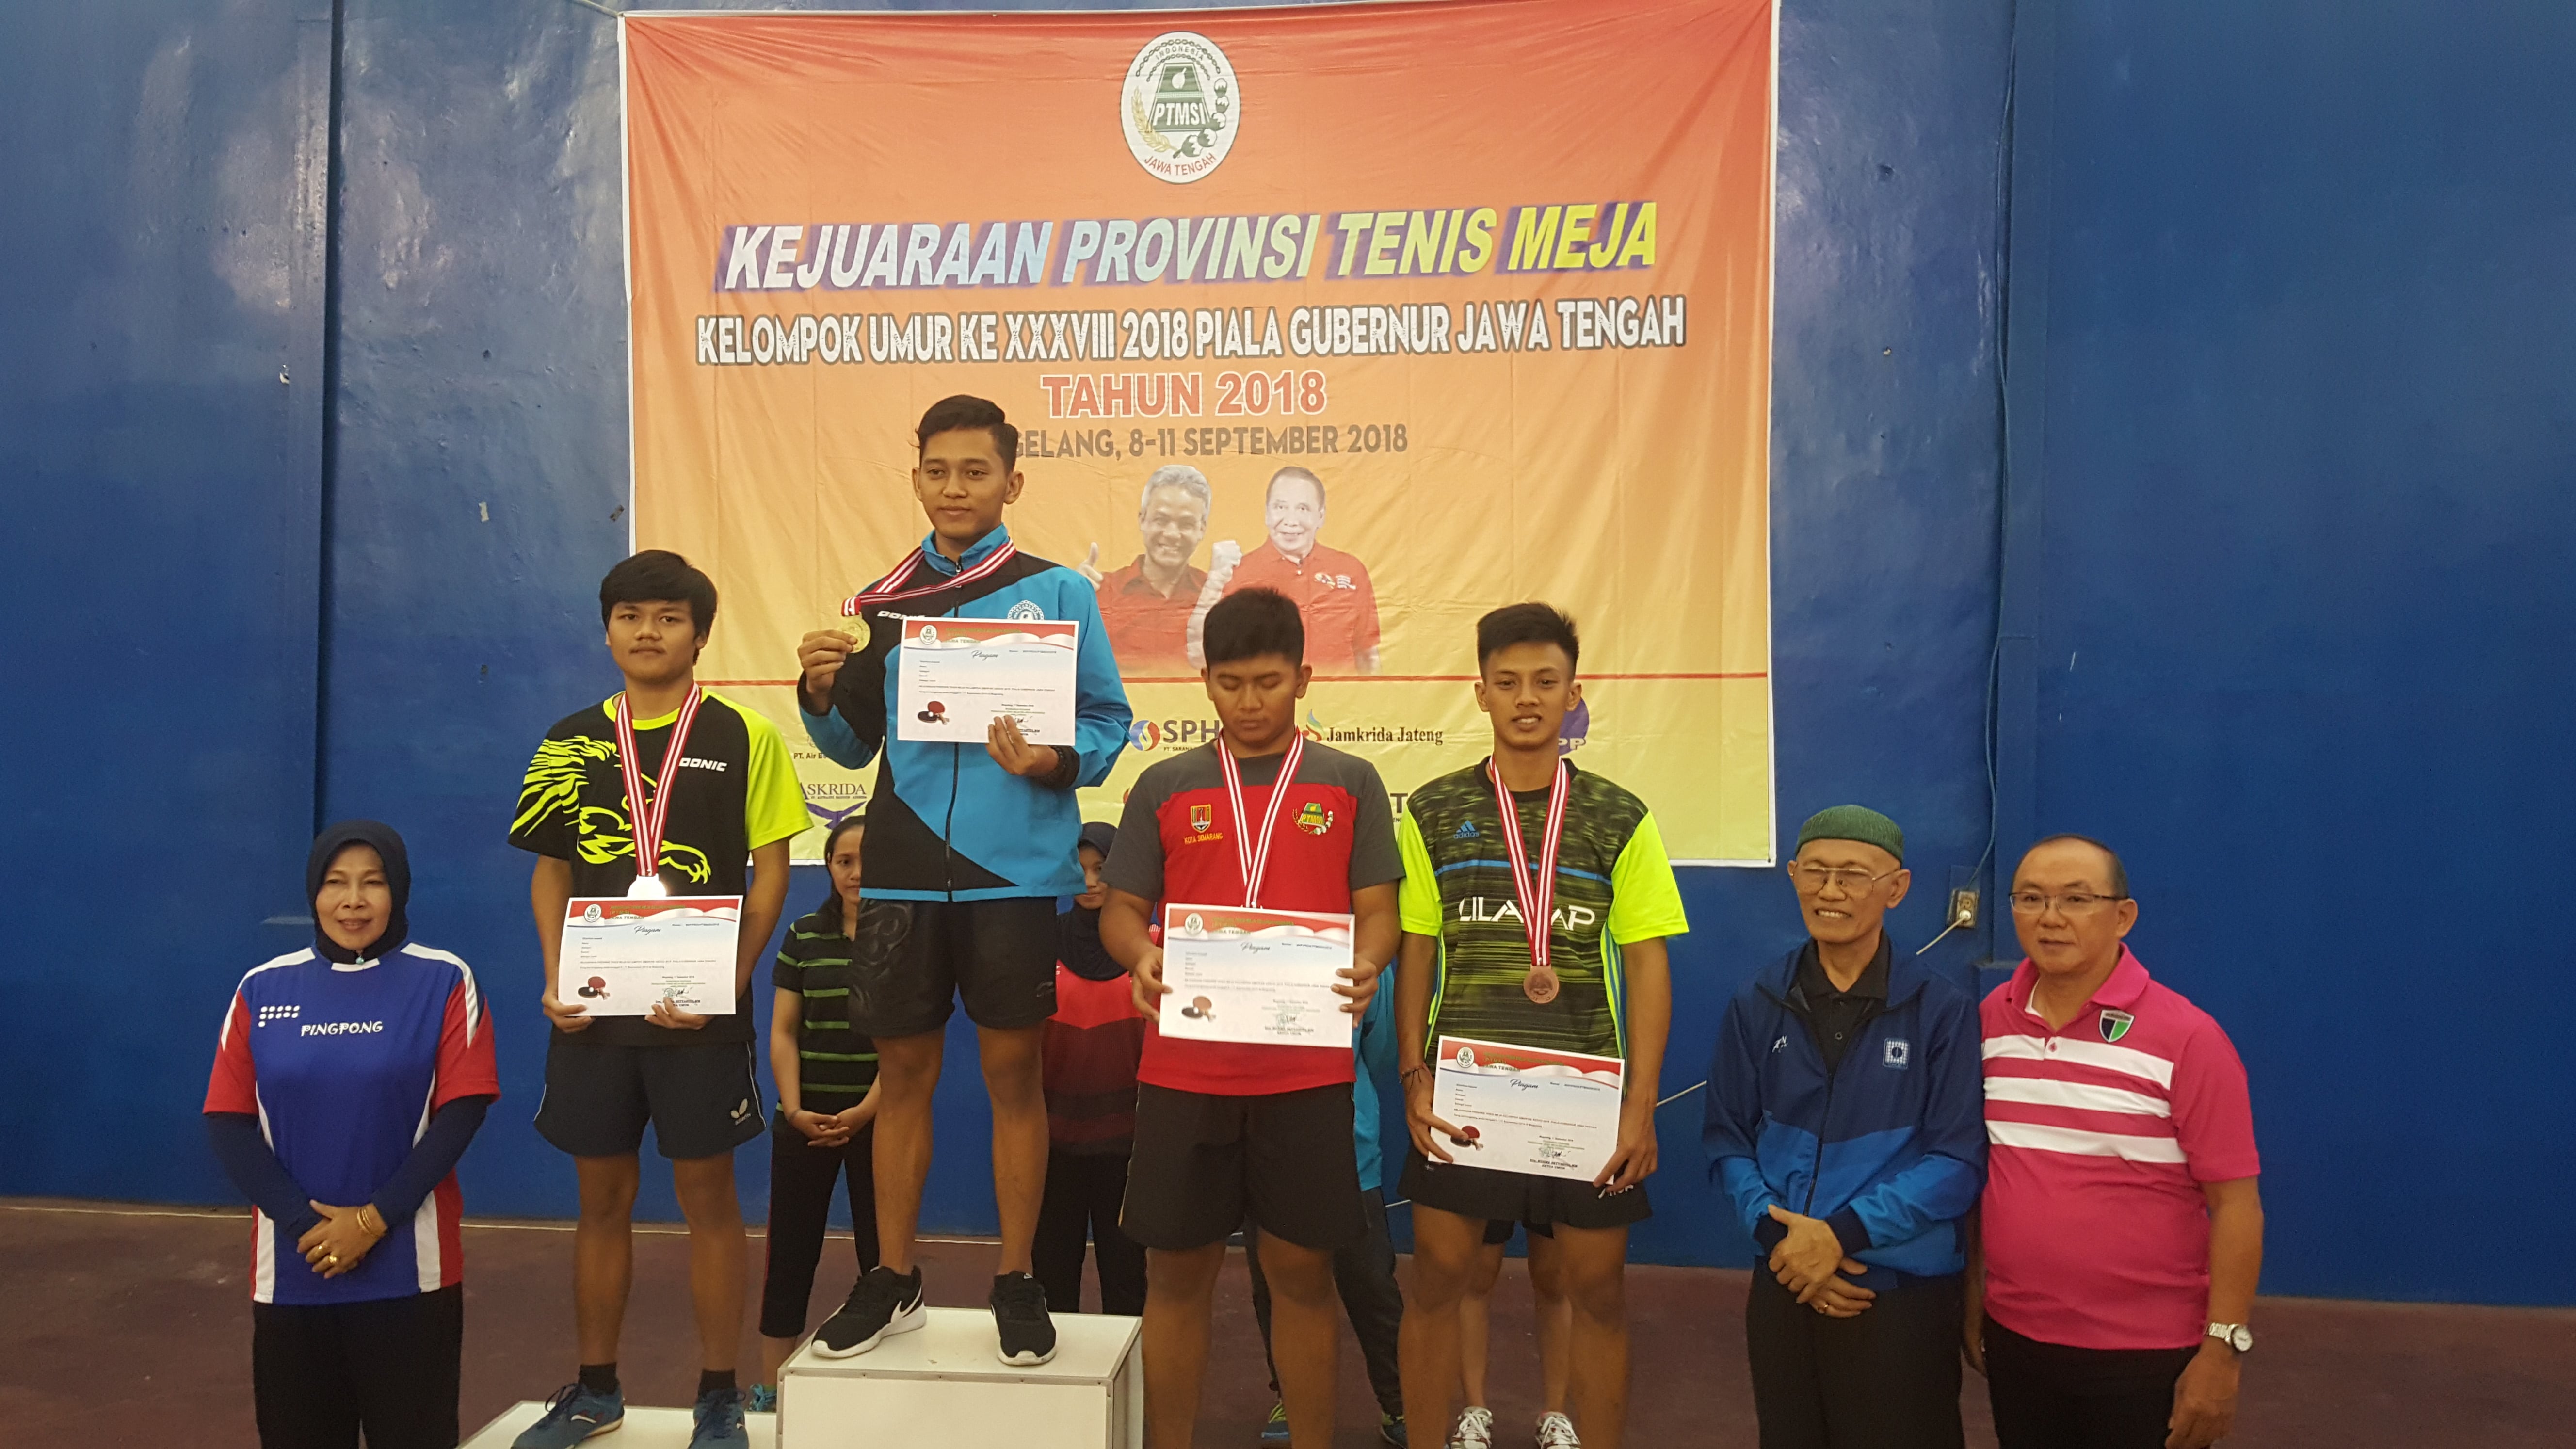 Foto Kejuaraan Provinsi Tenis Meja Kelompok Umur Ke XXXVIII 2018 Piala Gubernur Jawa Tengah